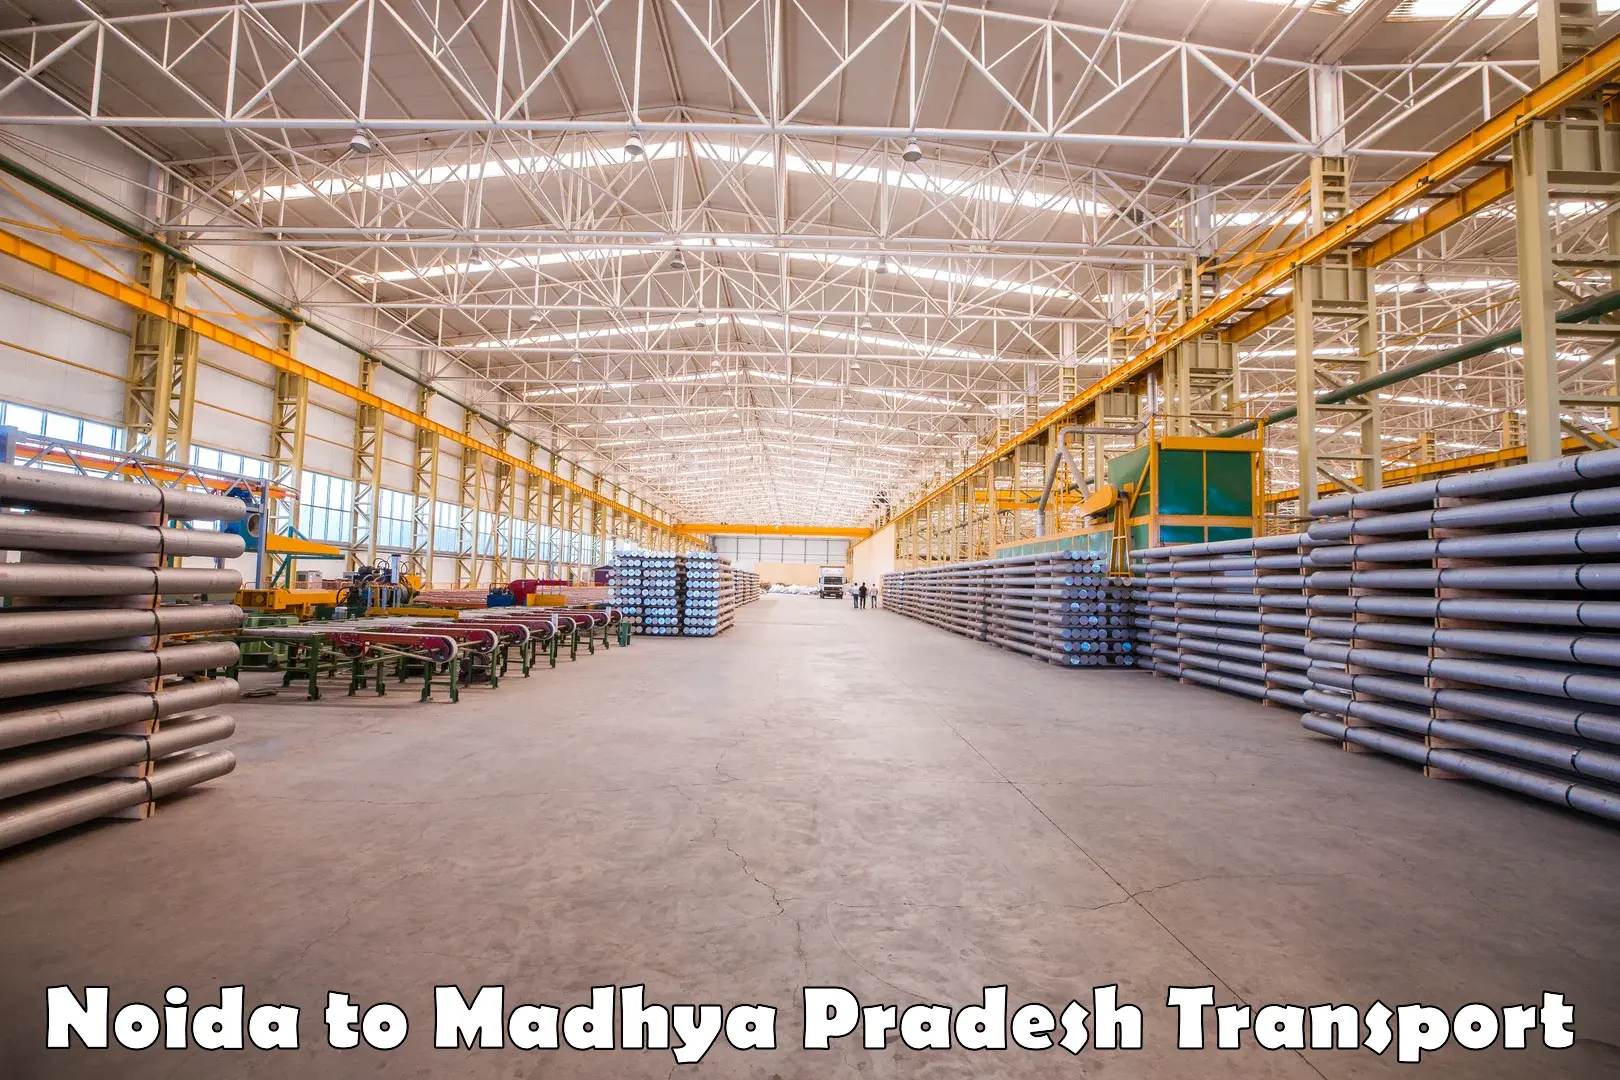 Truck transport companies in India Noida to Ashoknagar